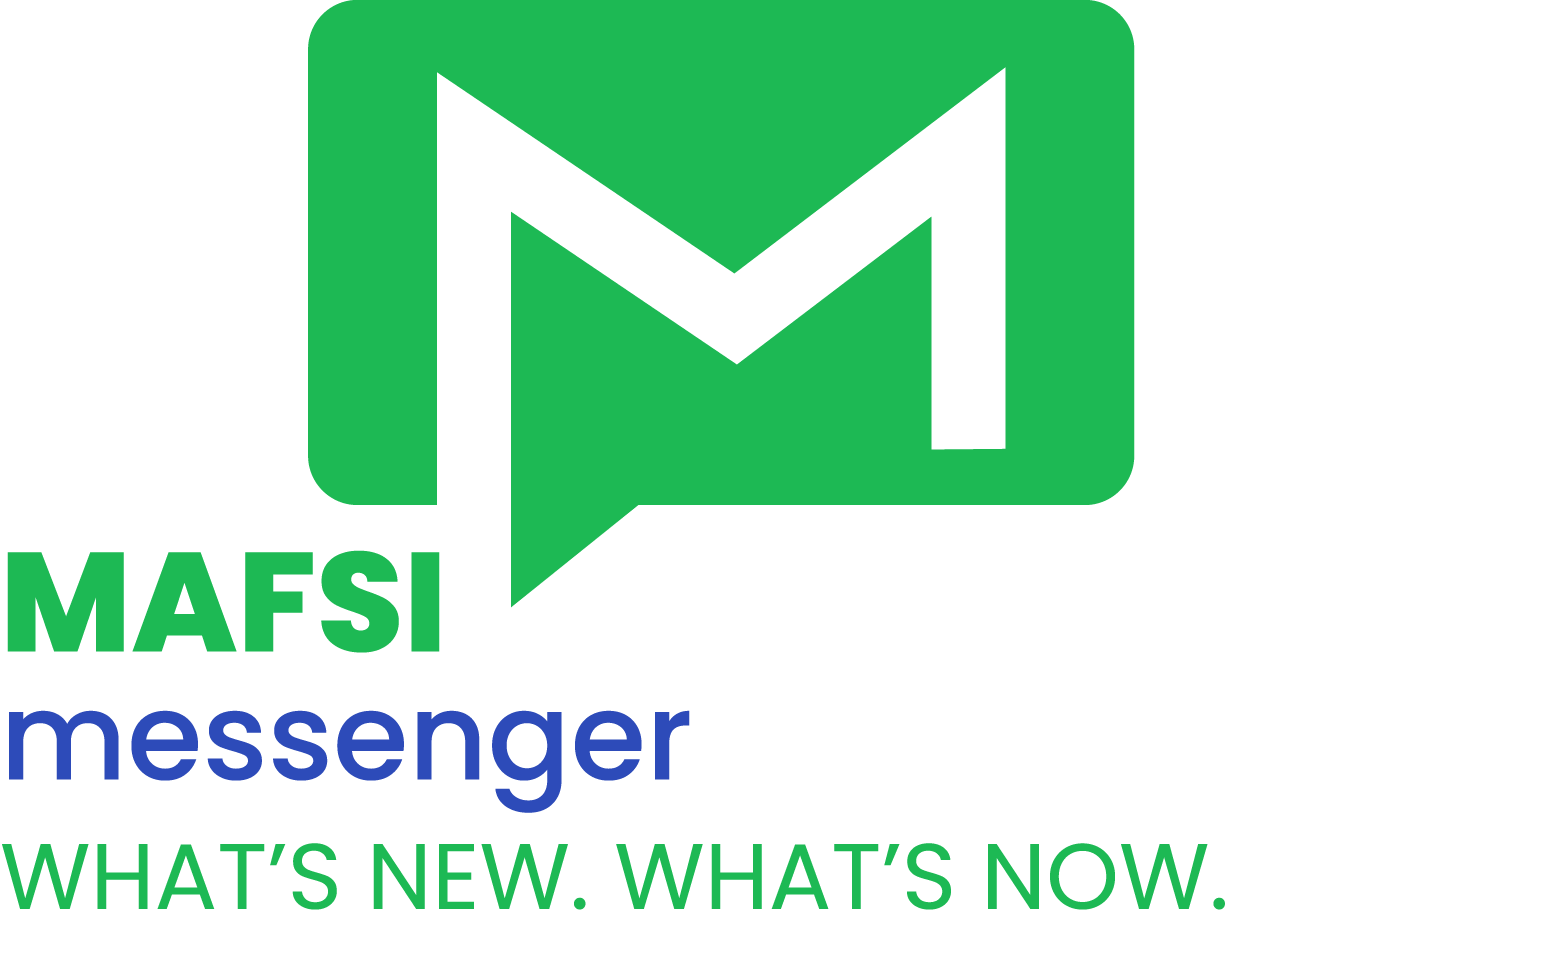 Mafsi Messenger Blog Banners v4 committee revised Tight to Artboards_MAFSI Messenger Logo